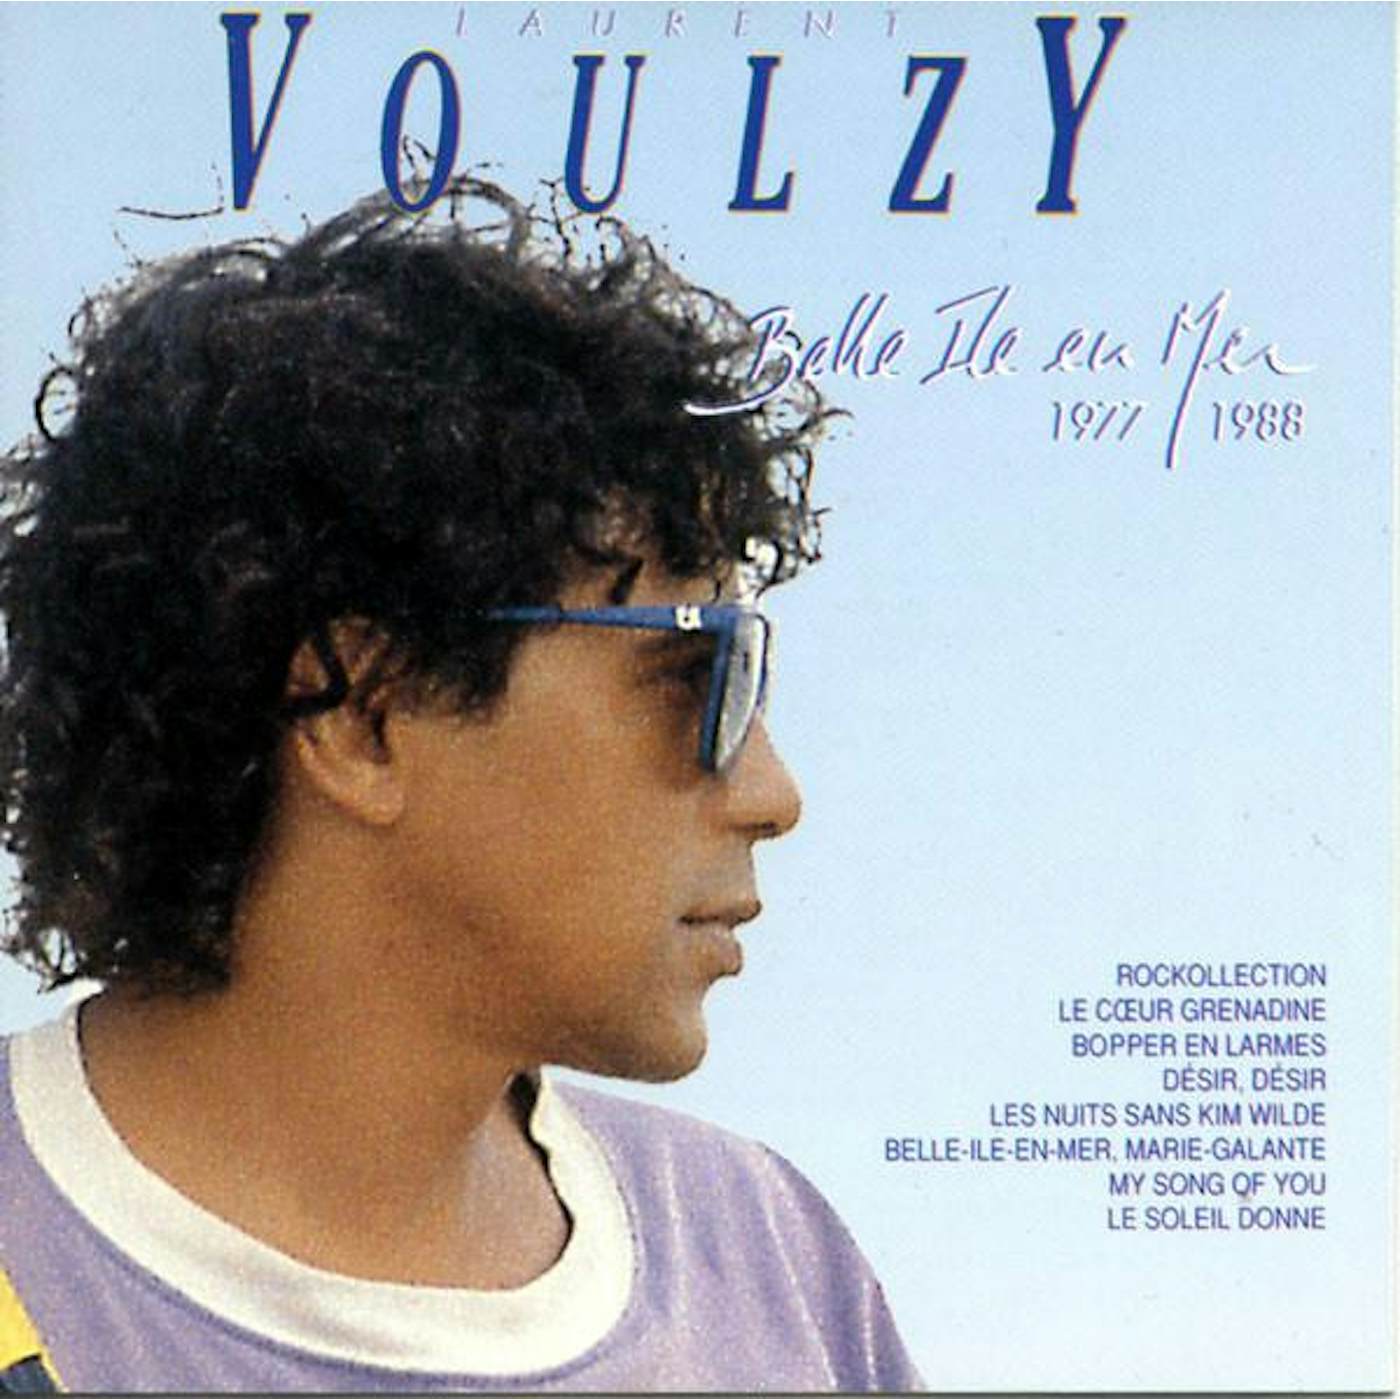 Laurent Voulzy BELLE ILE EN MER 1977: 1988 CD